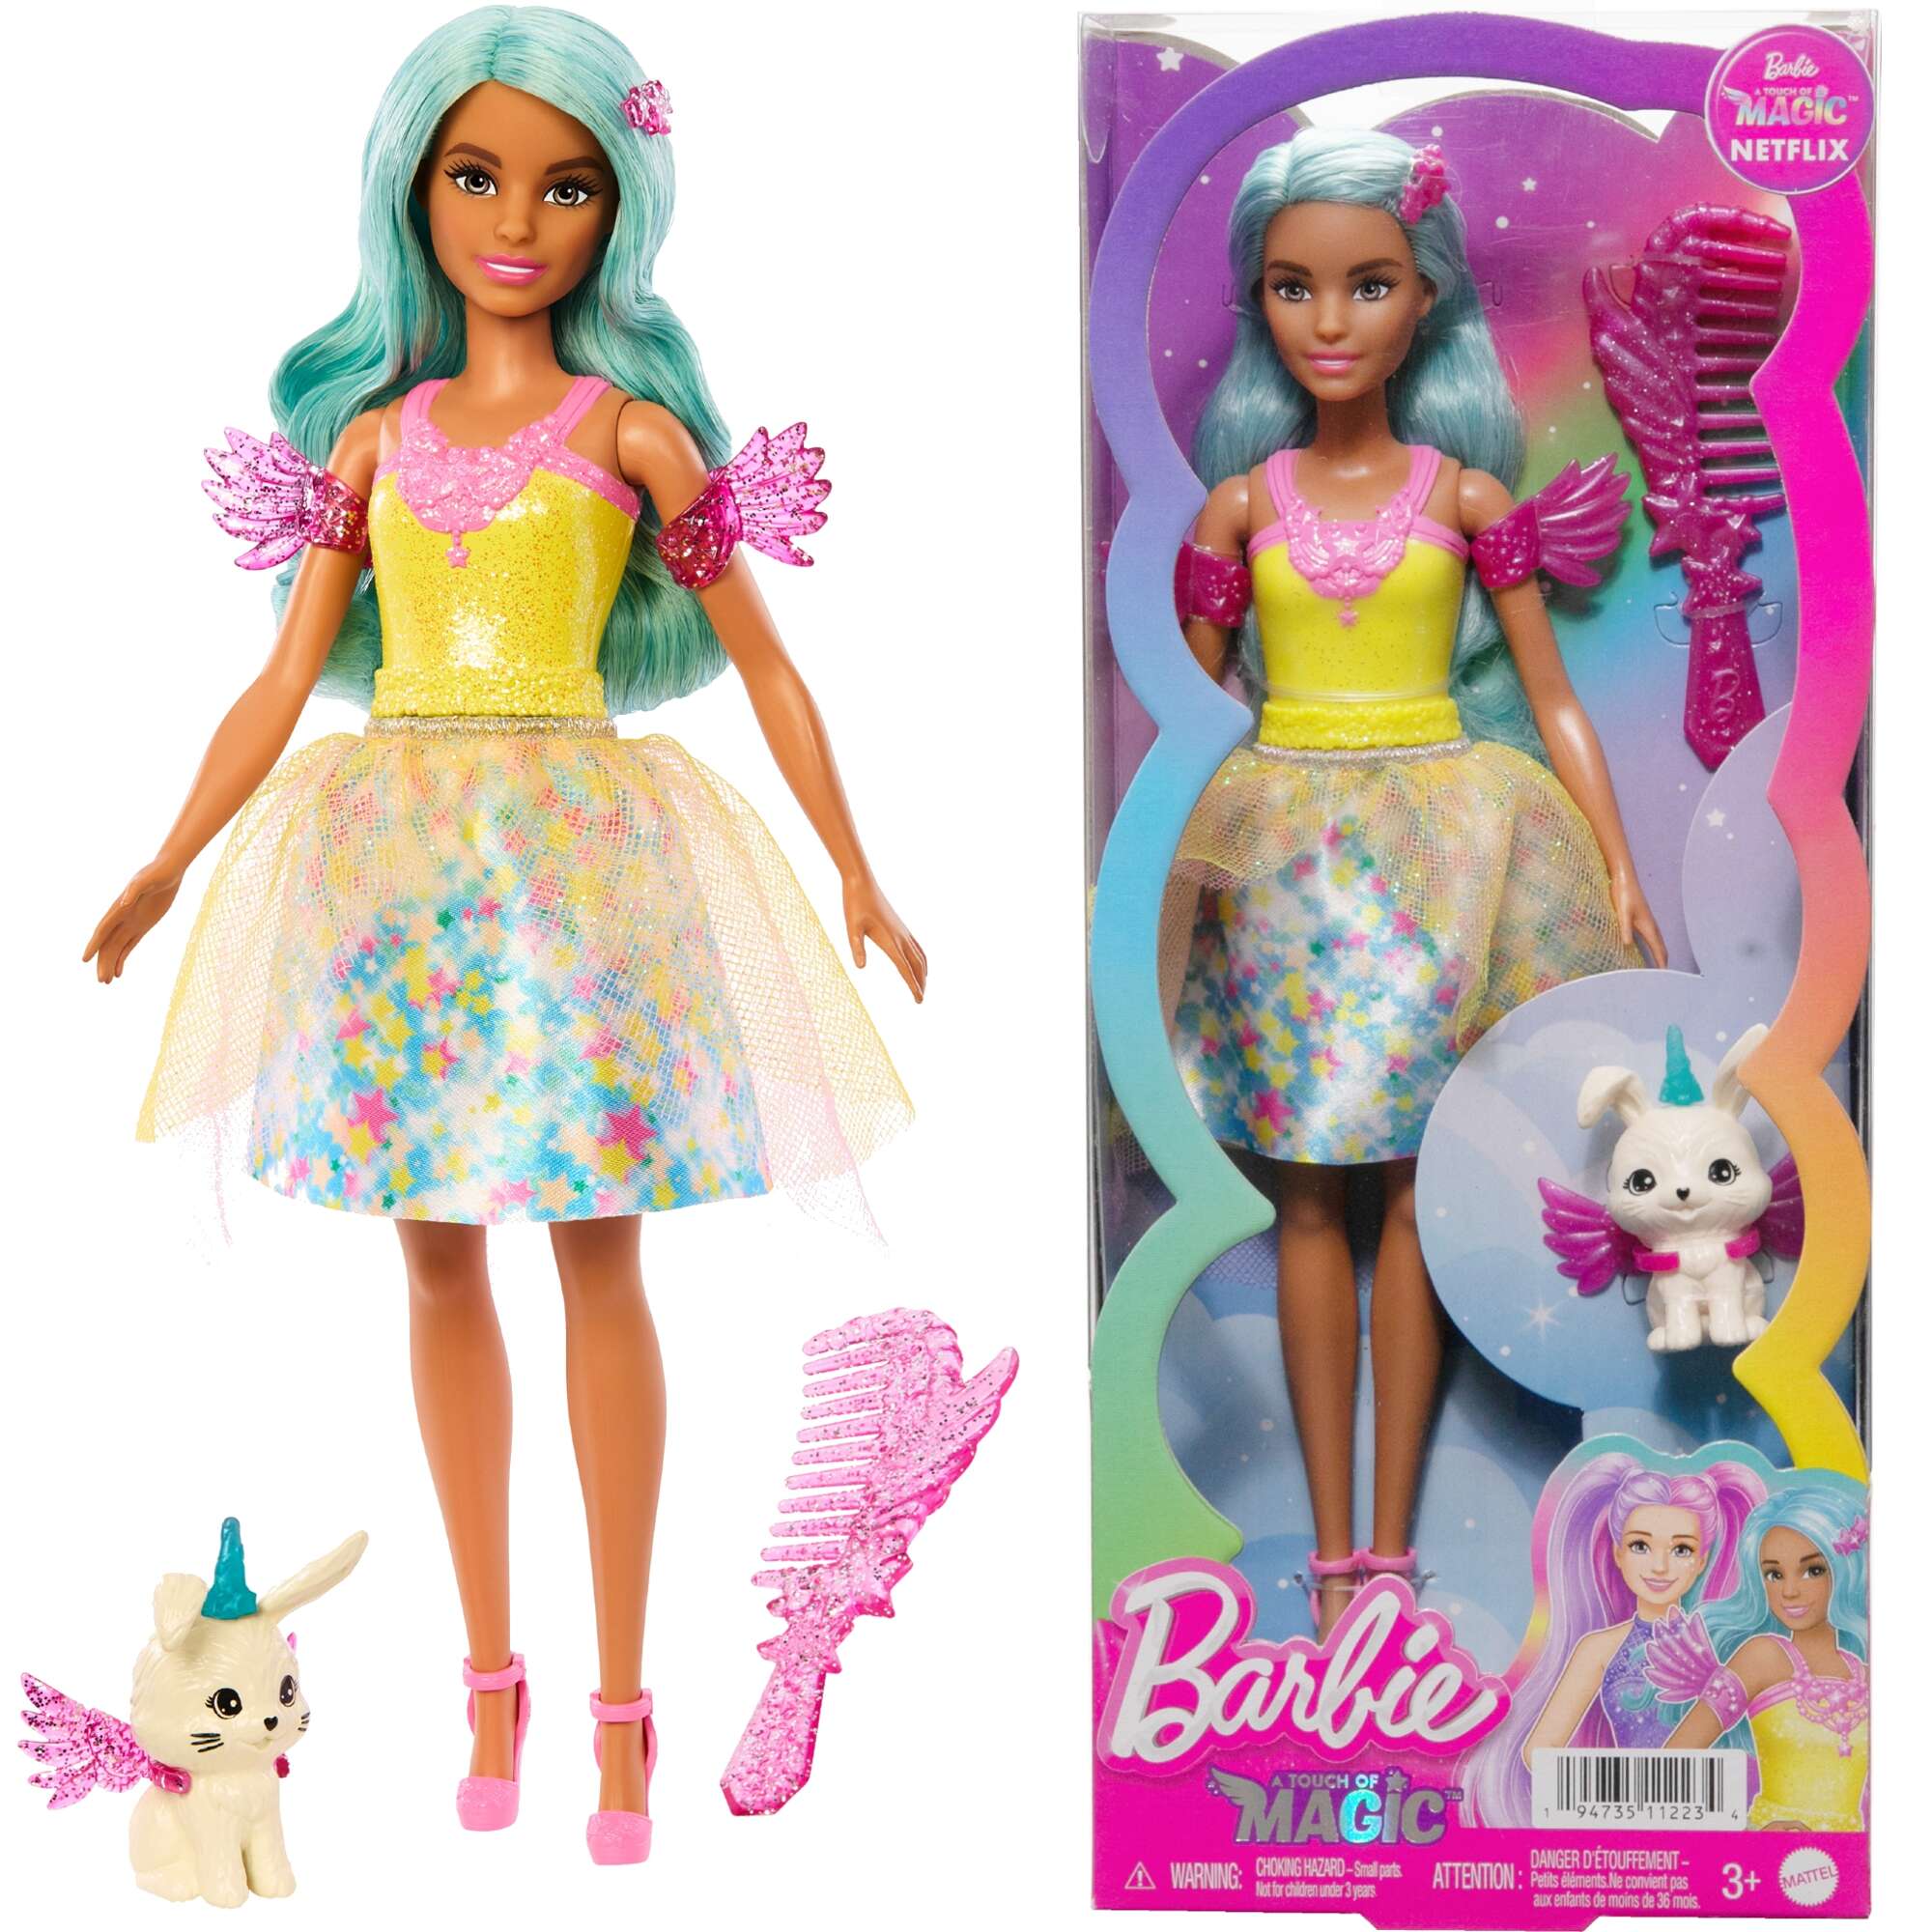 Barbie may zestaw Lalka Kolekcjonerska a Touch of Magic niebieskowosa wrka + pupil i akcesoria